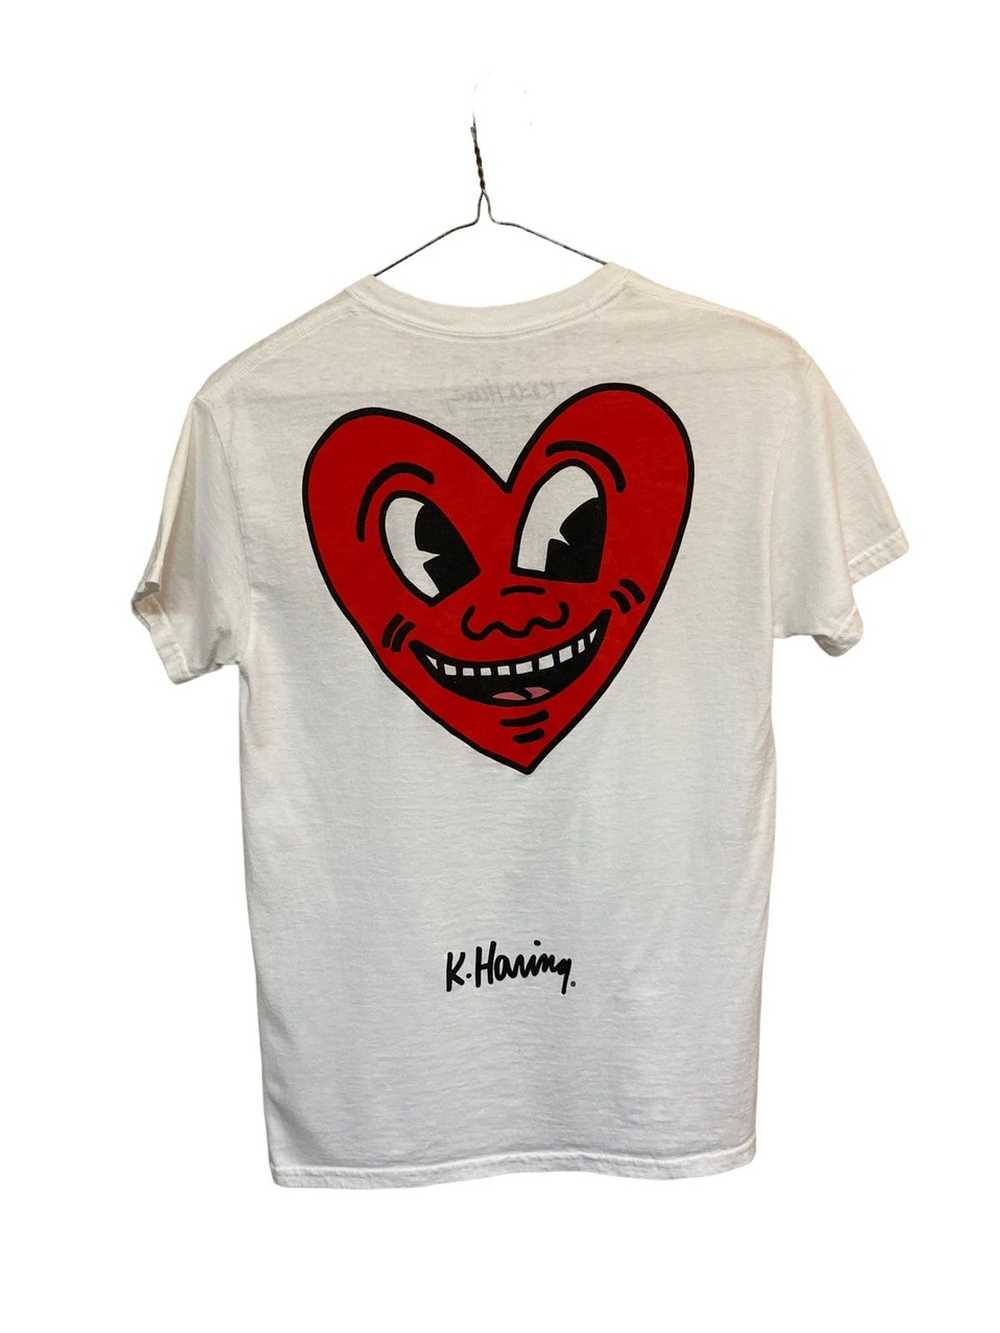 Art × Keith Haring Kieth Haring Heart Art T Shirt - image 2